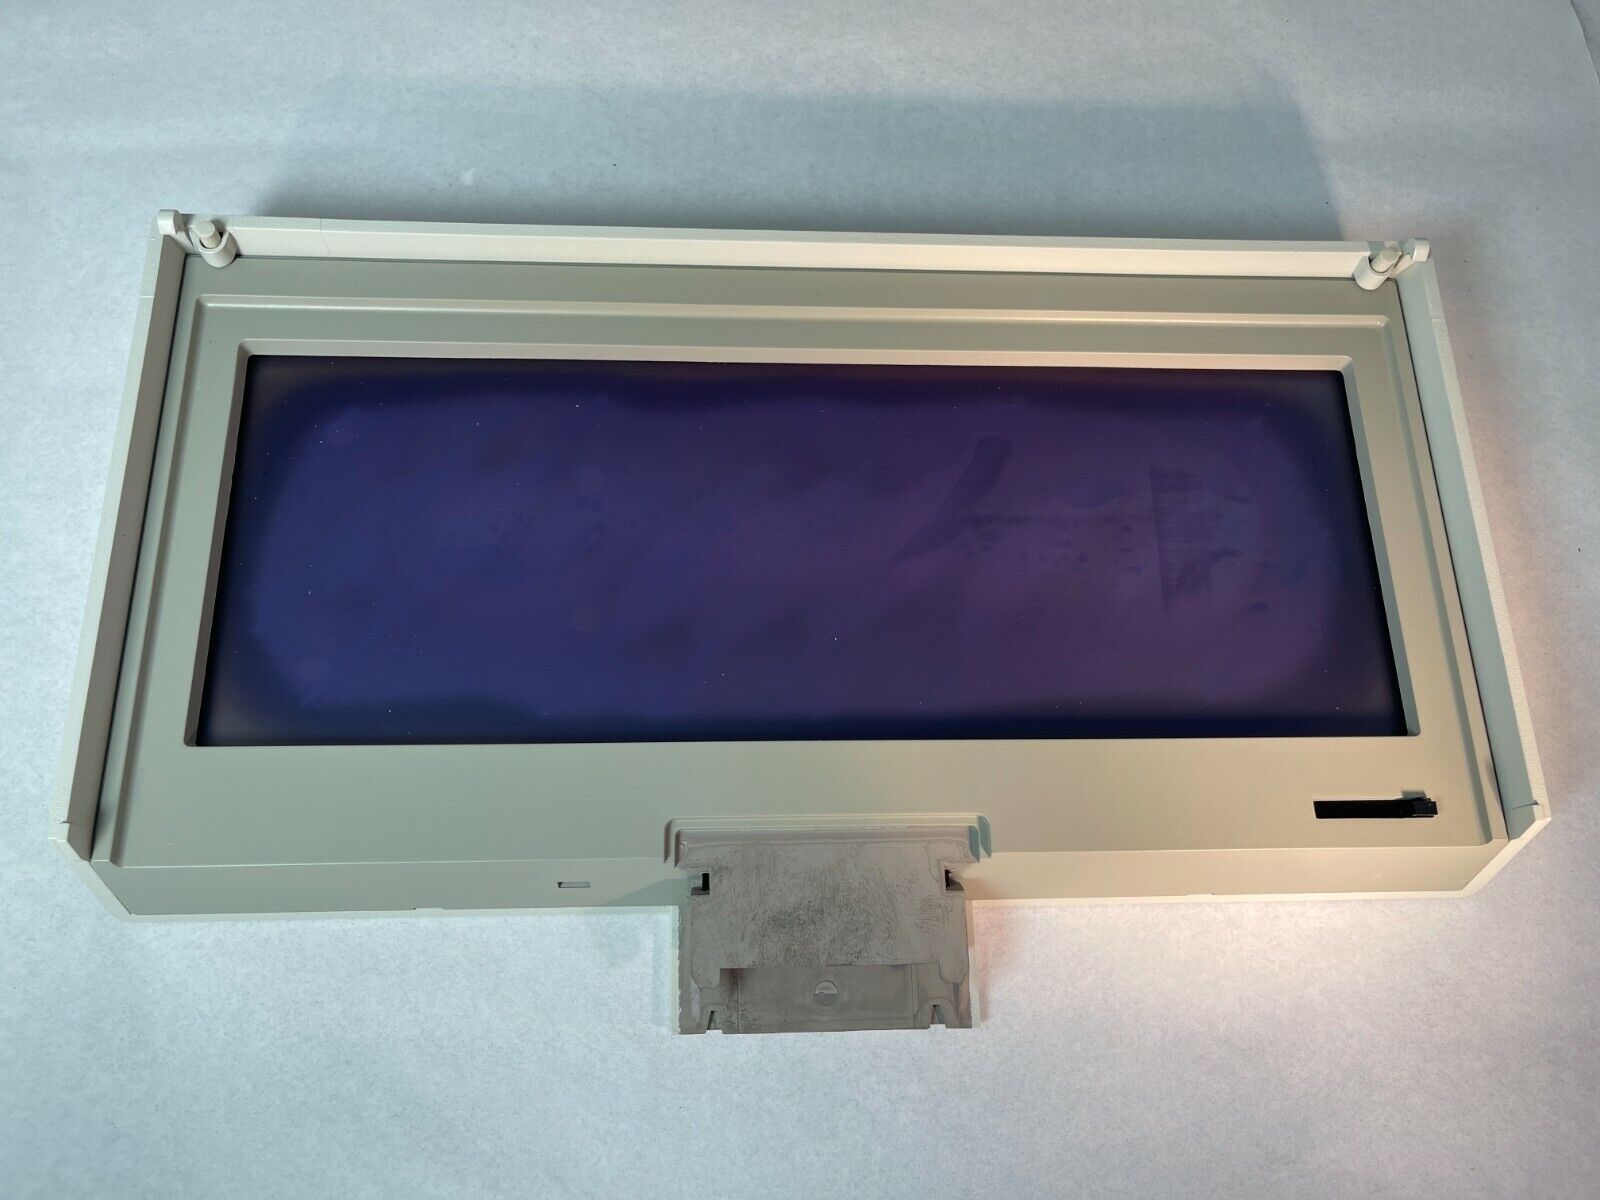 IBM PC Convertible Enhanced LCD - 2682782 - In box